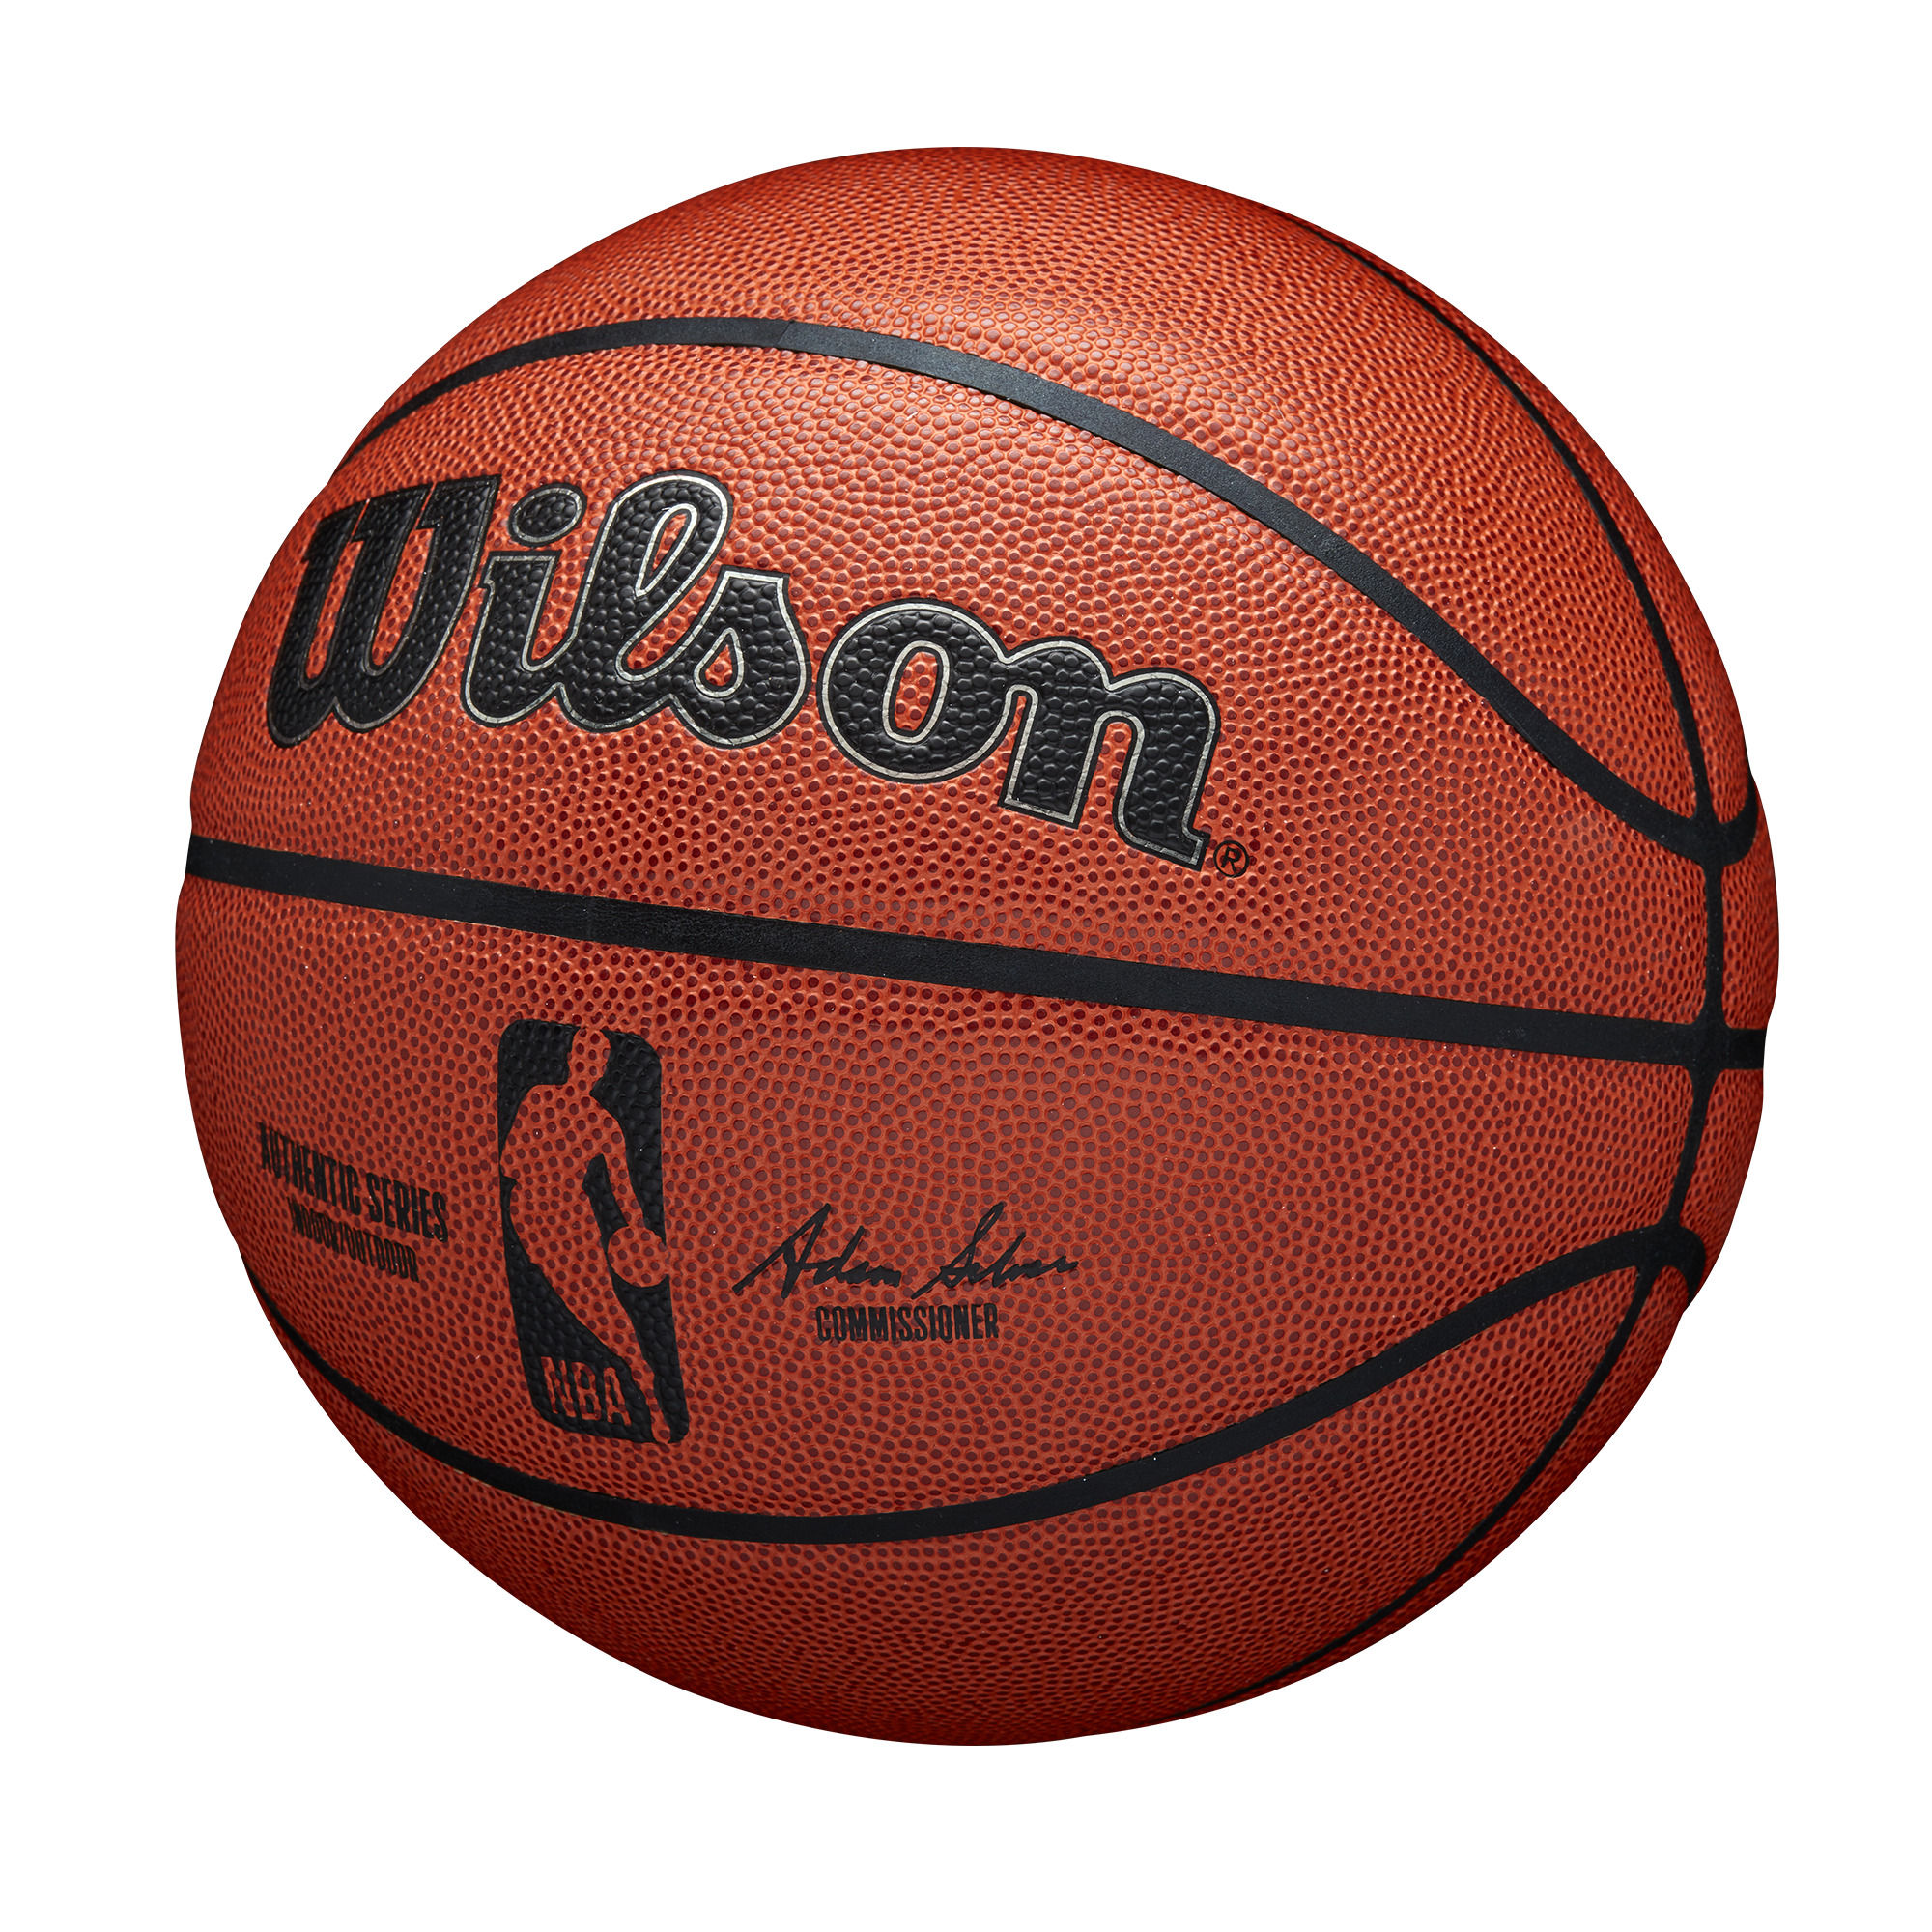 Ballons de basket NBA Authentic Game Ball Replica Indoor/Outdoor